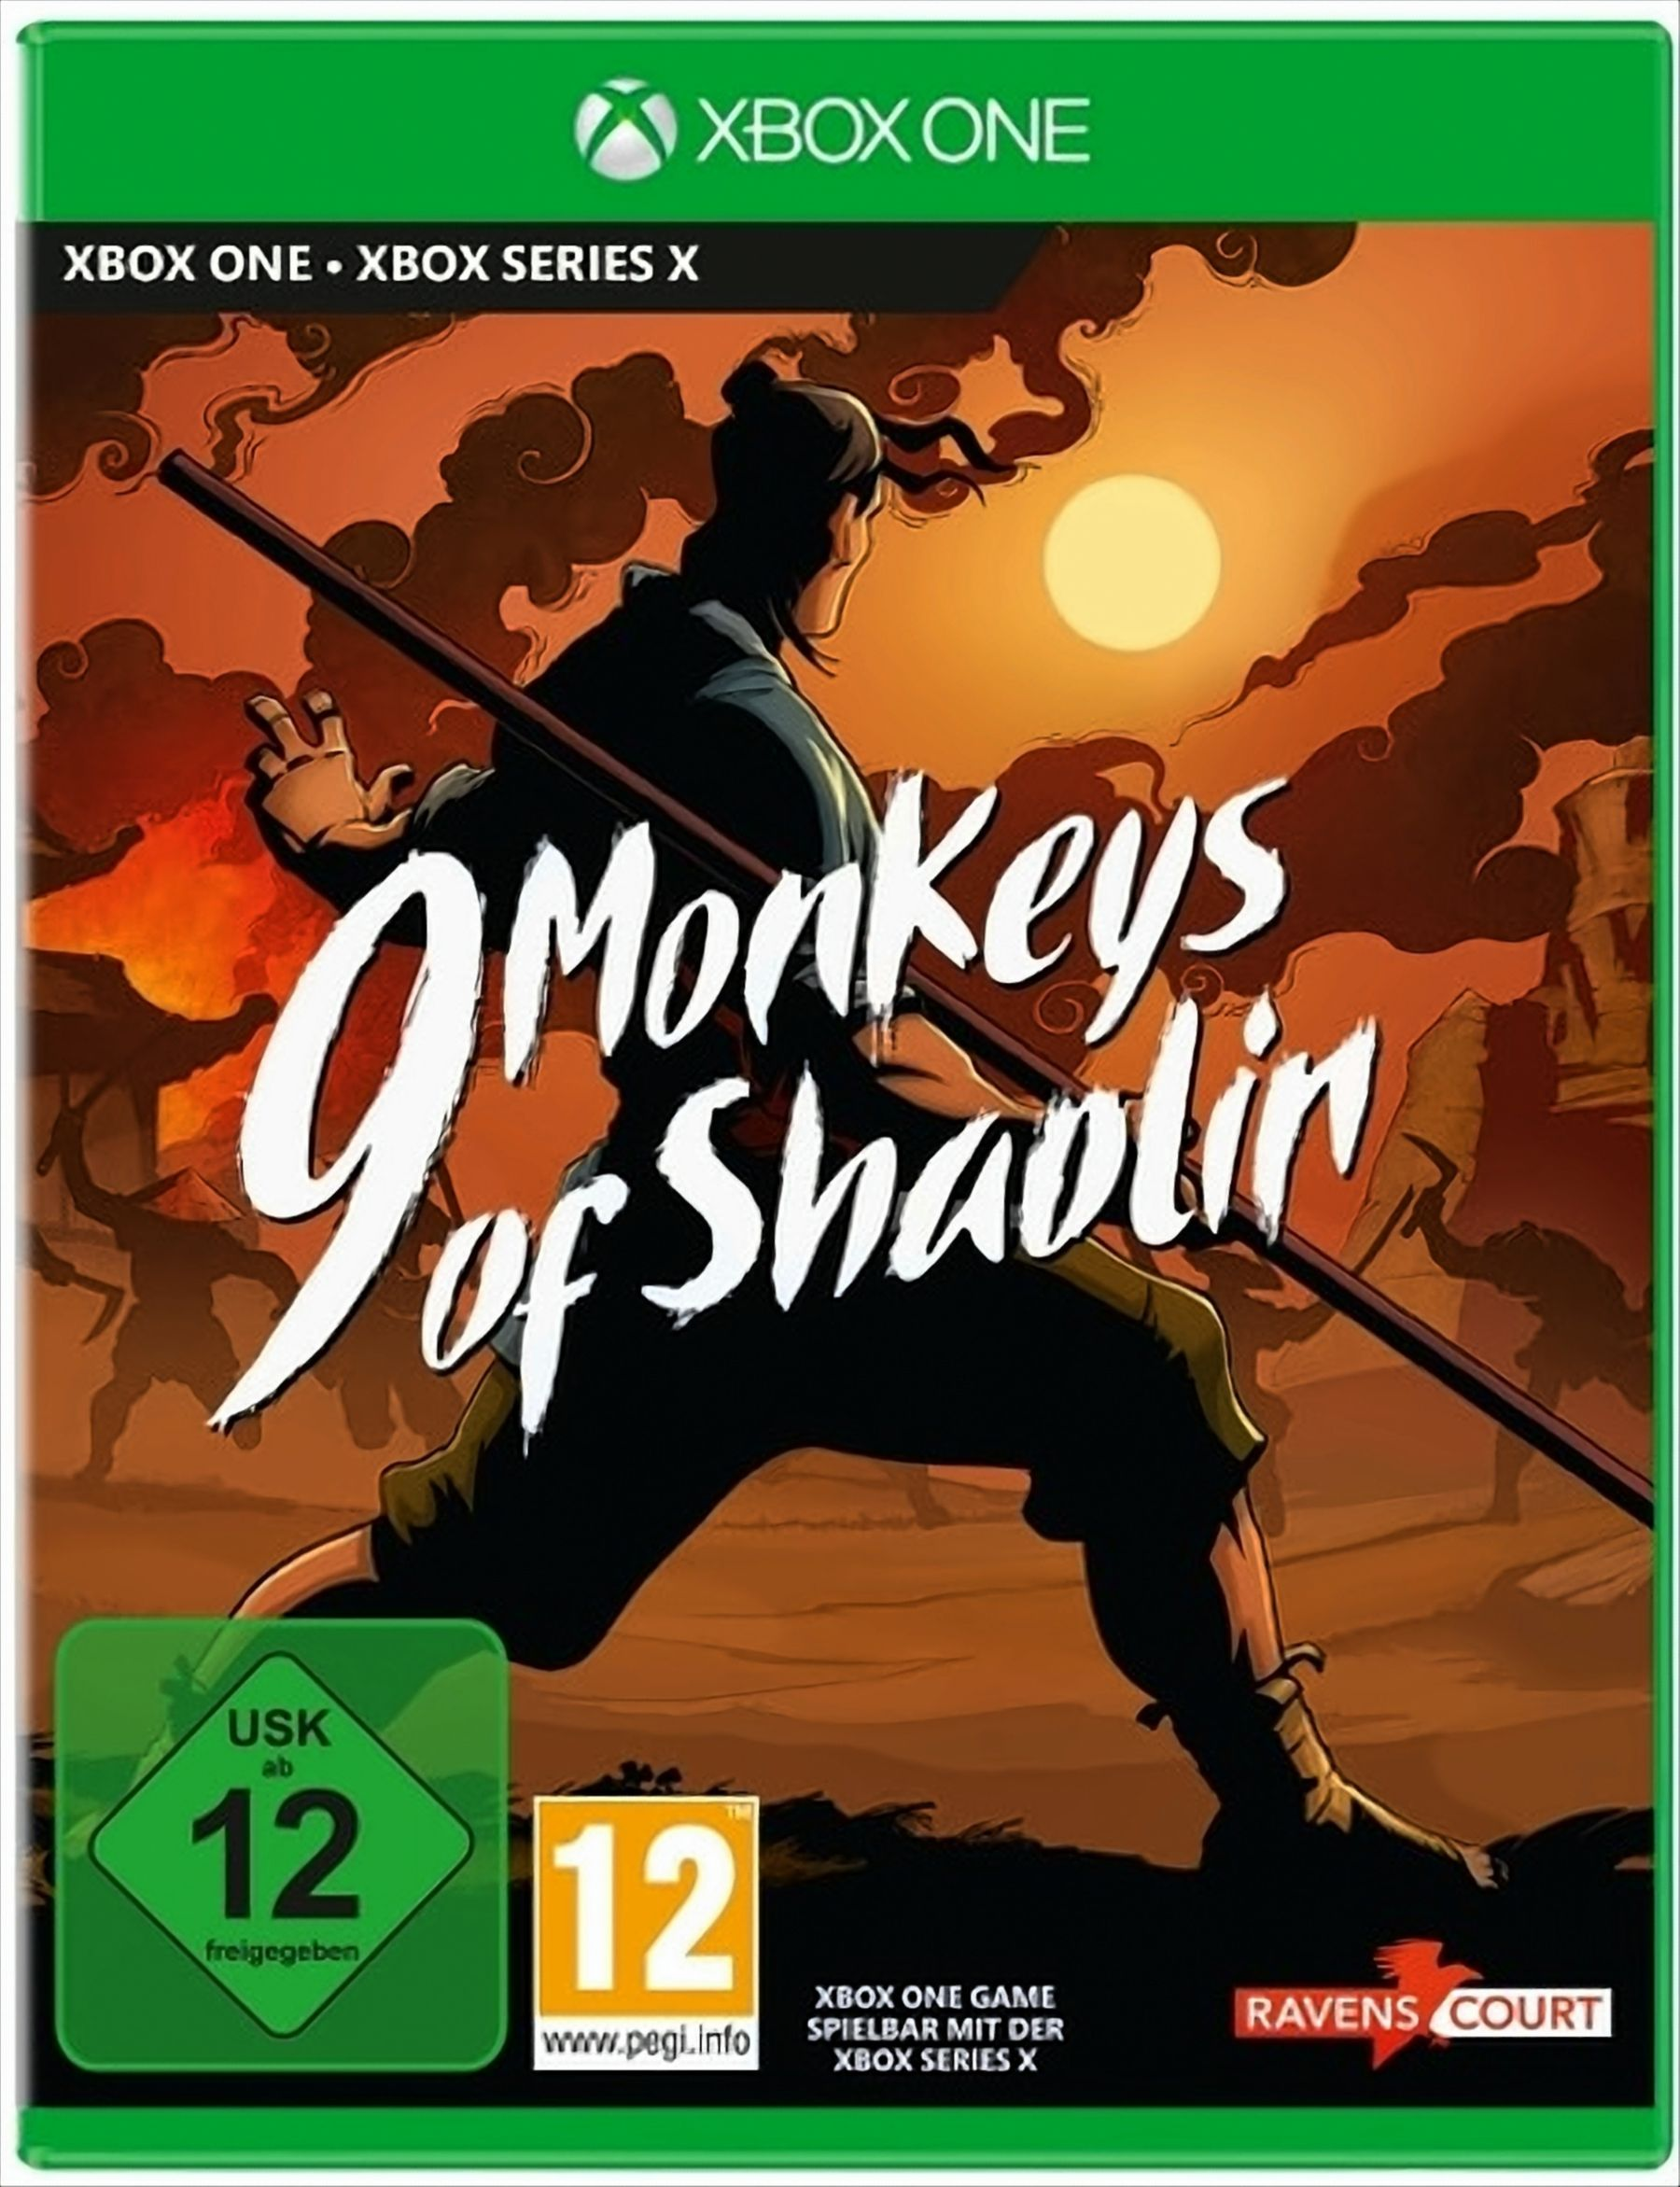 9 of Shaolin One] [Xbox - Monkeys